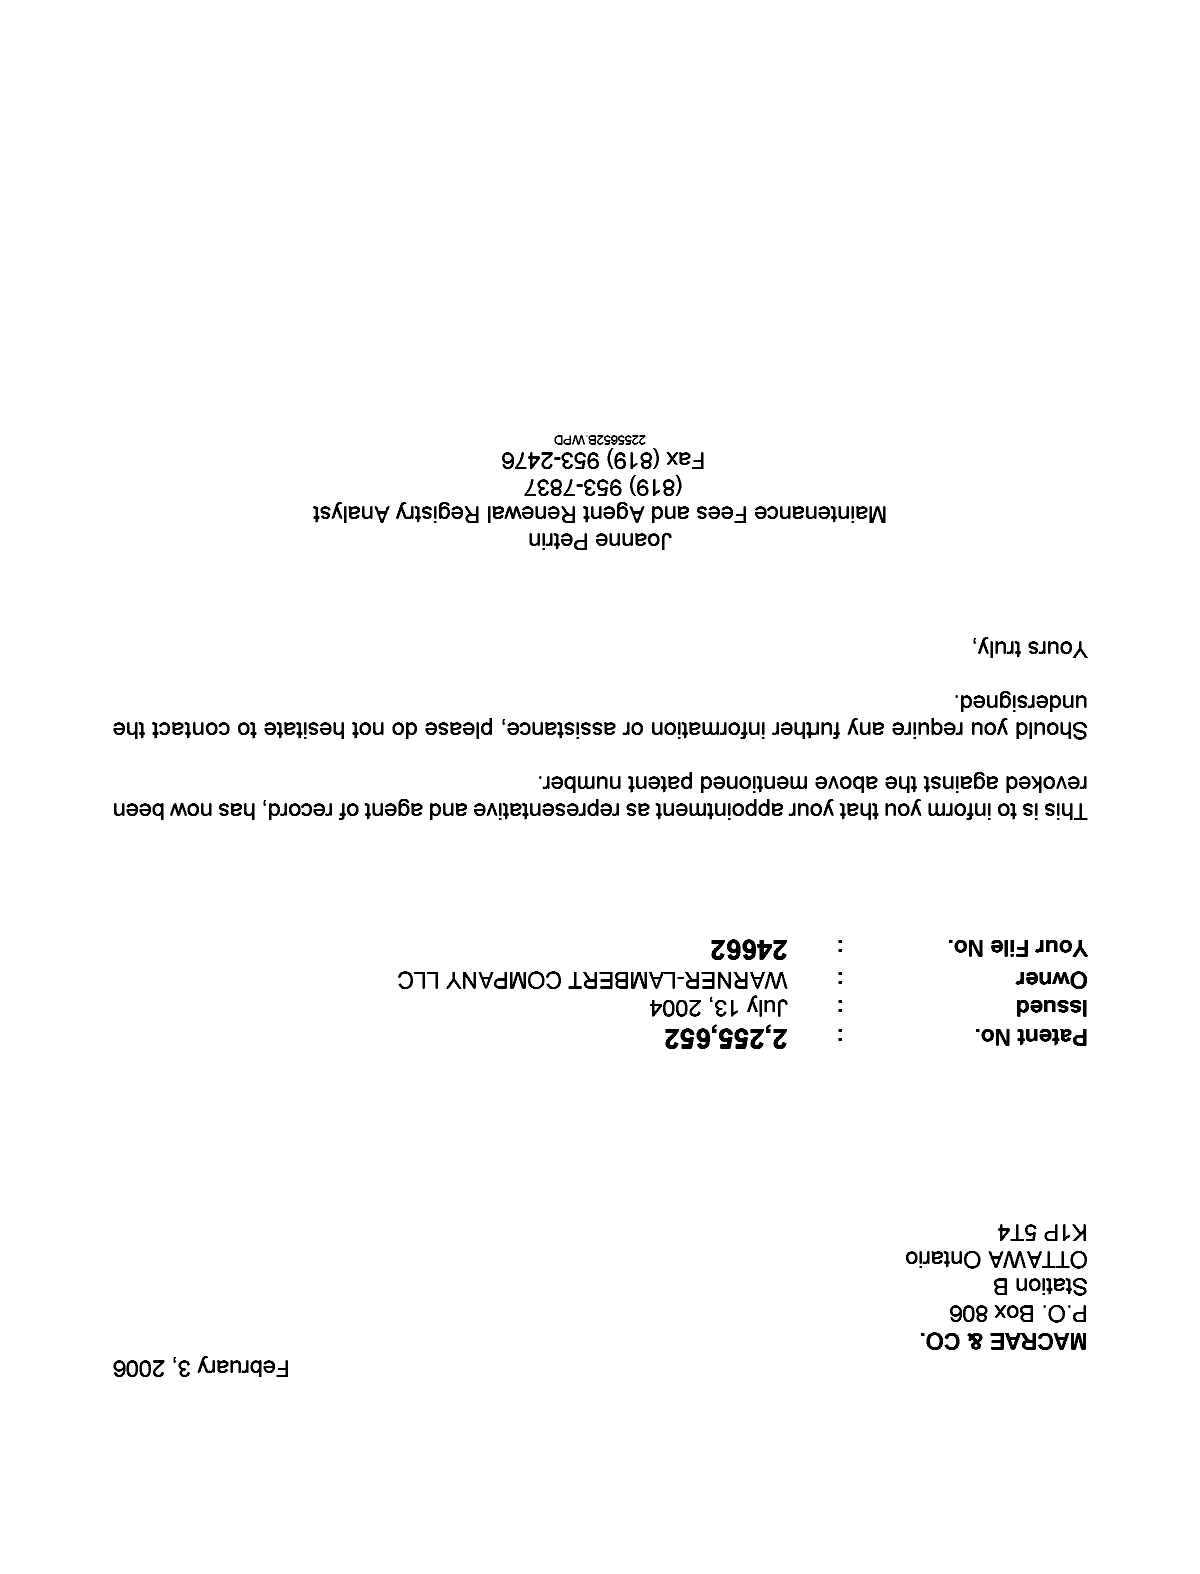 Canadian Patent Document 2255652. Correspondence 20051203. Image 1 of 1